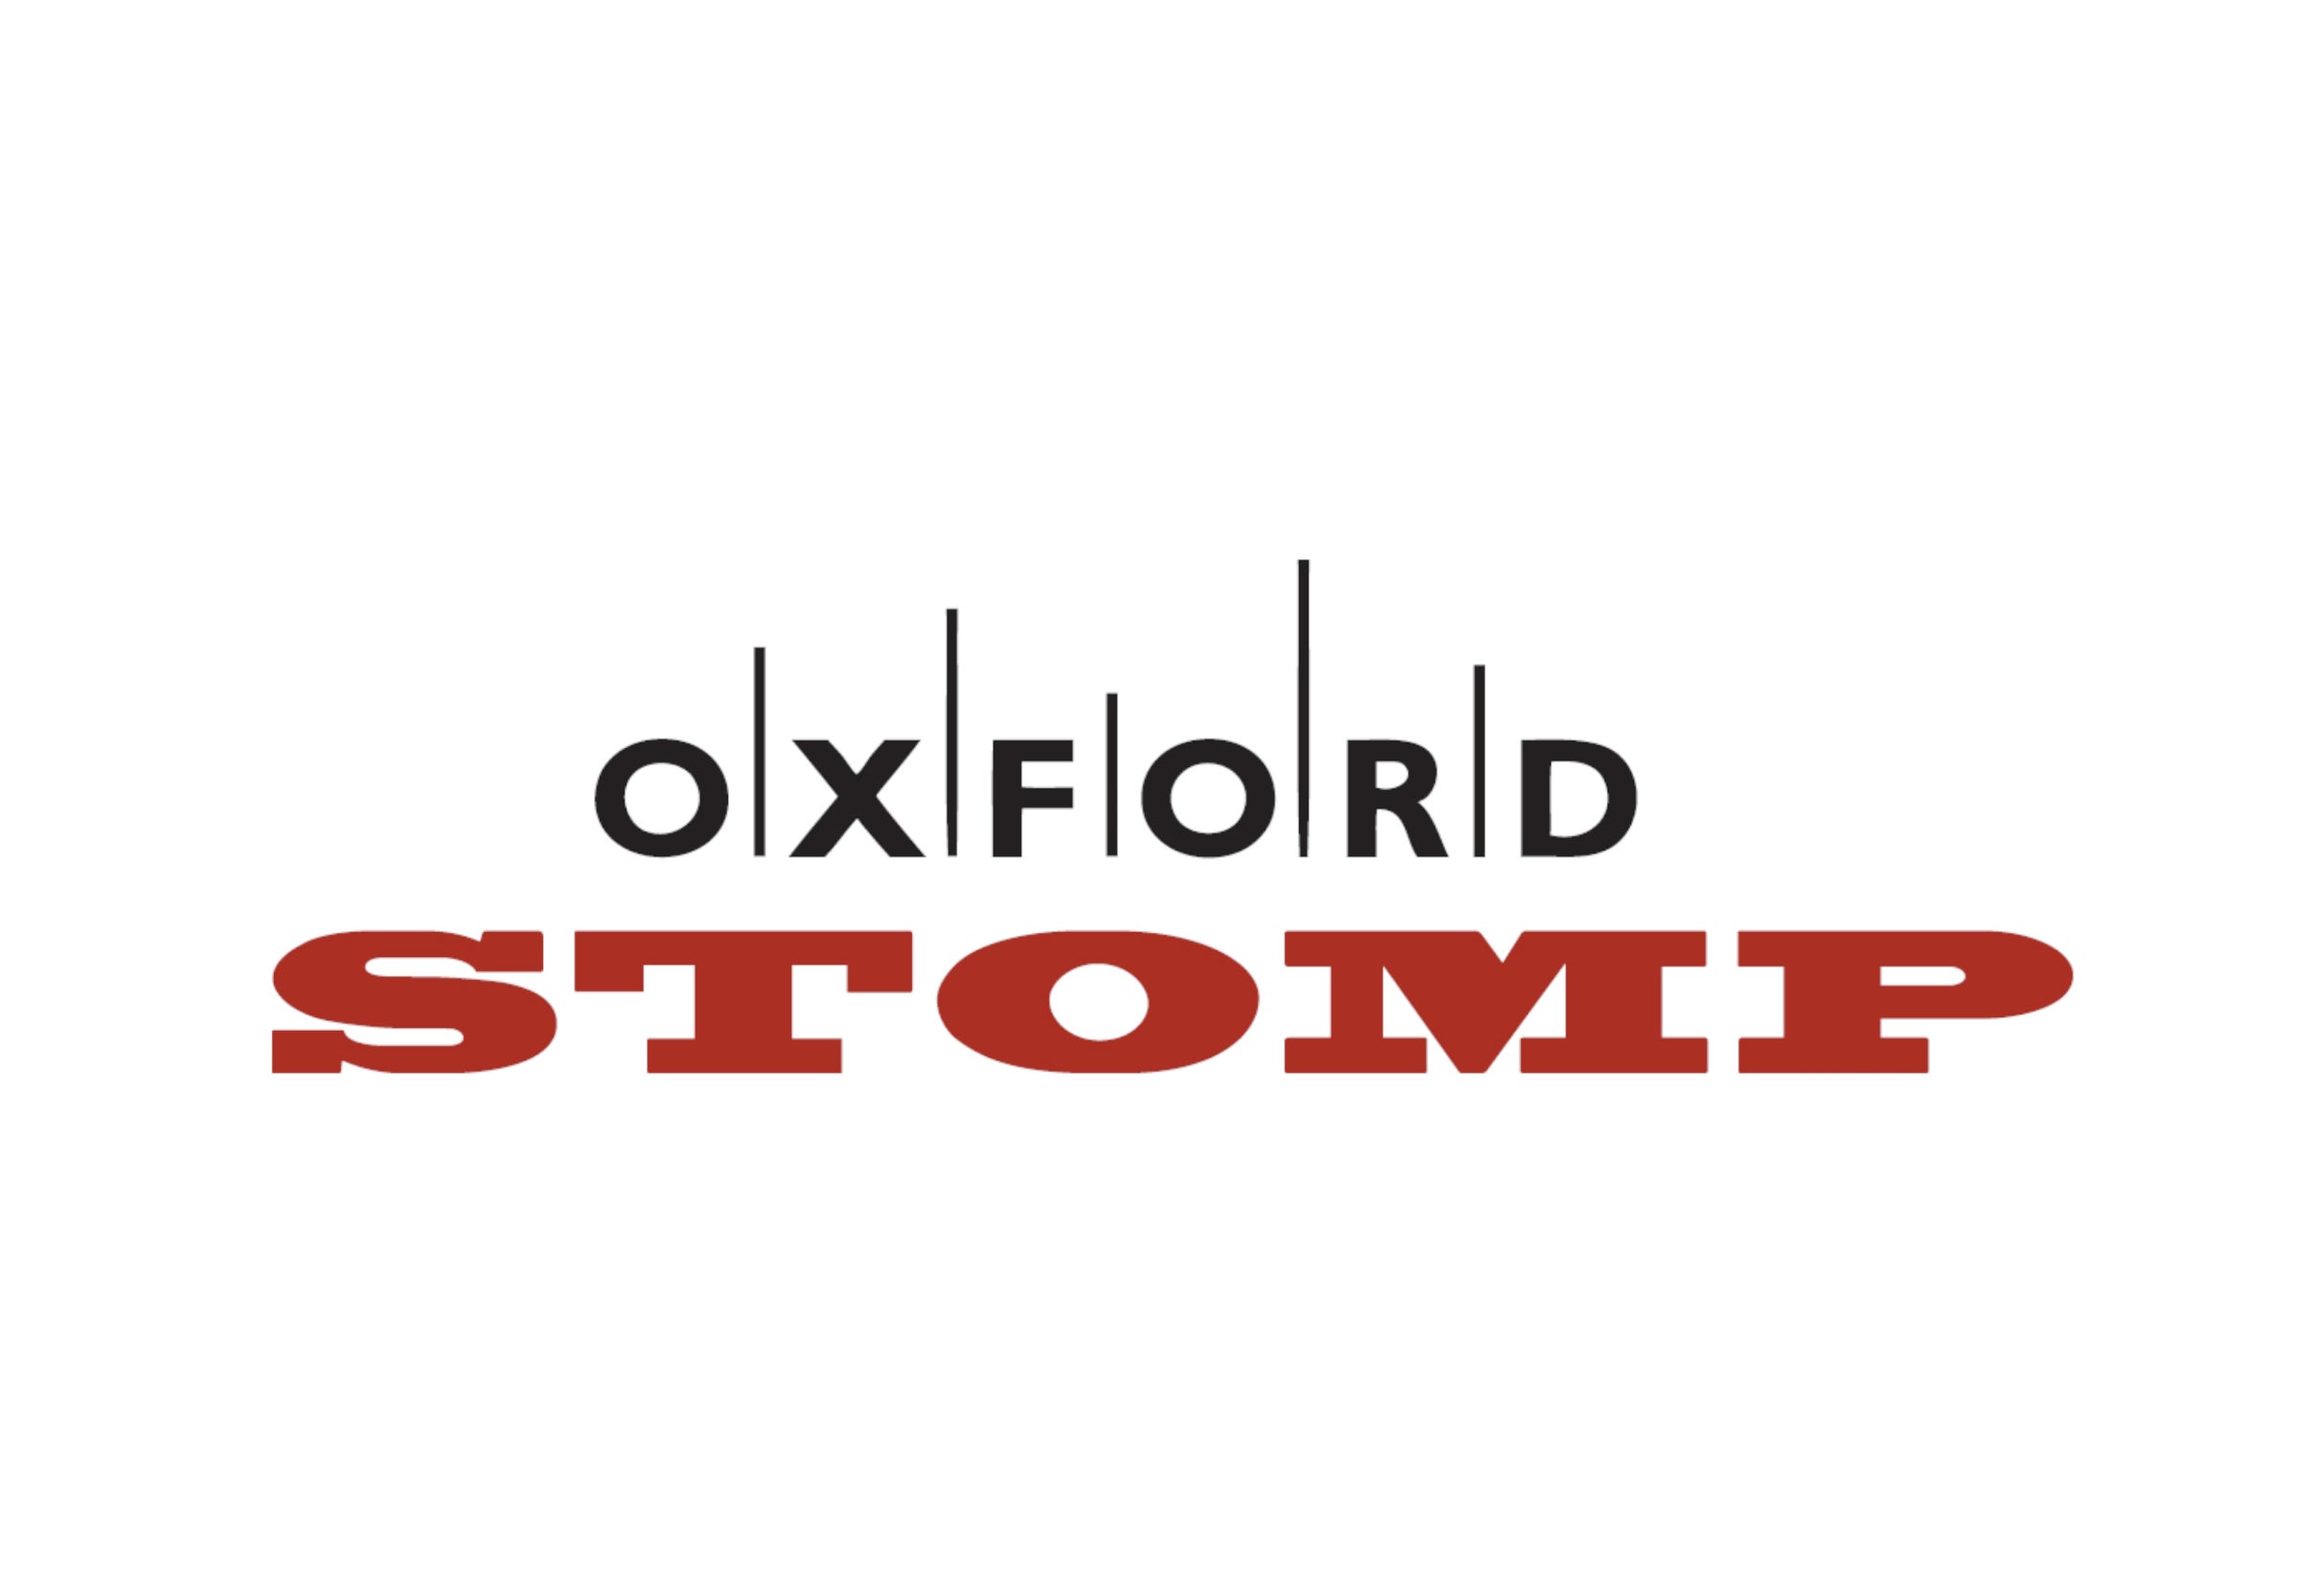 Oxford STOMP